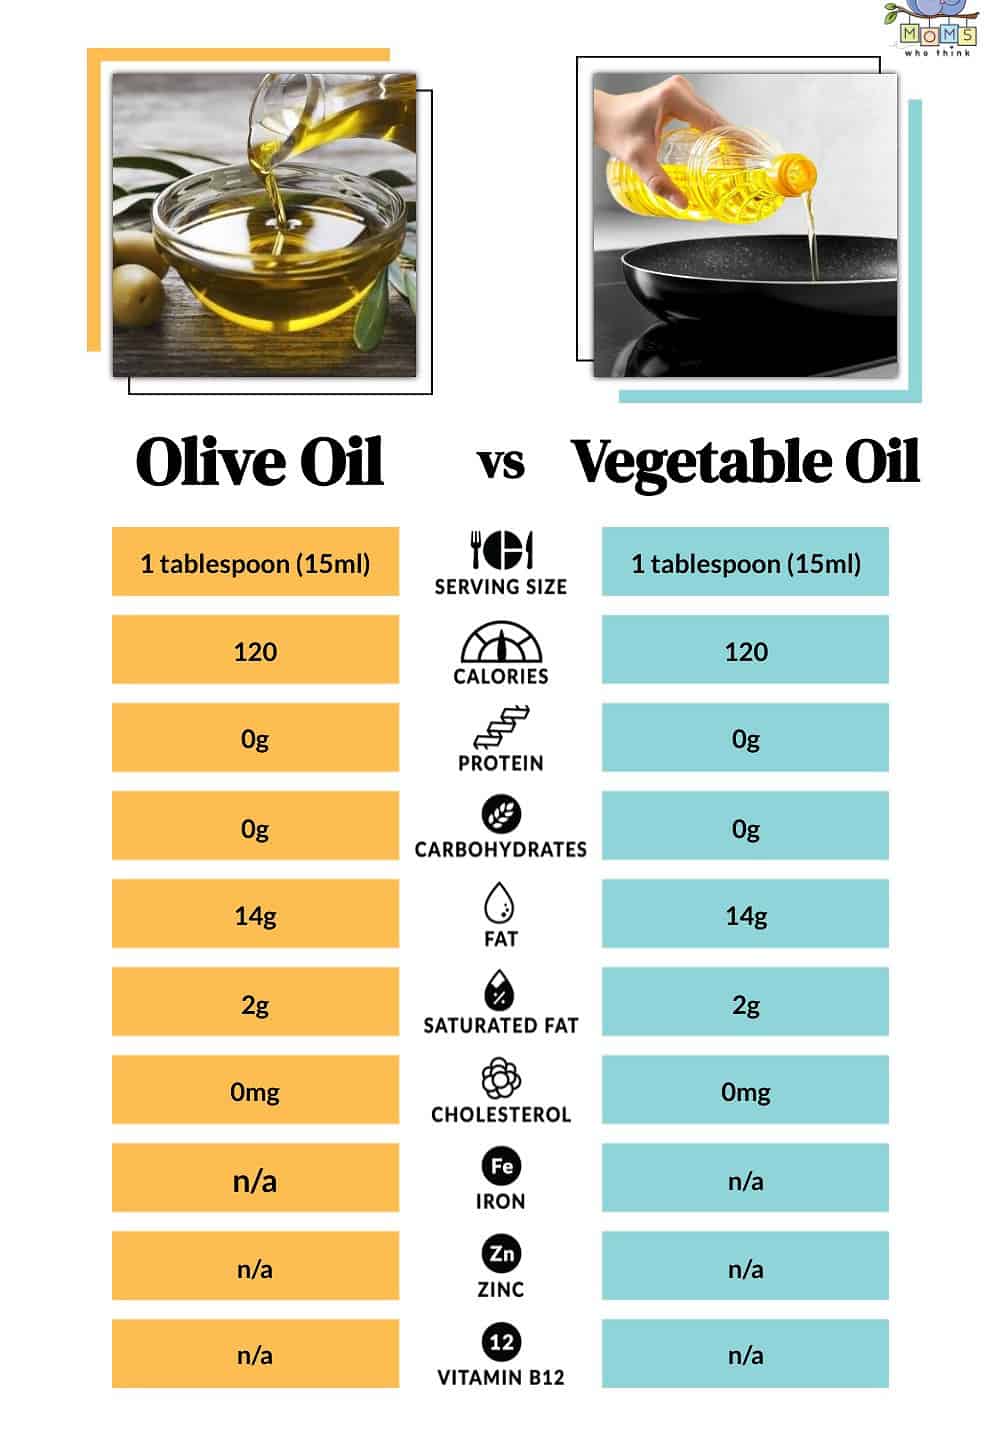 Olive Oil vs Vegetable Oil Nutritional Facts